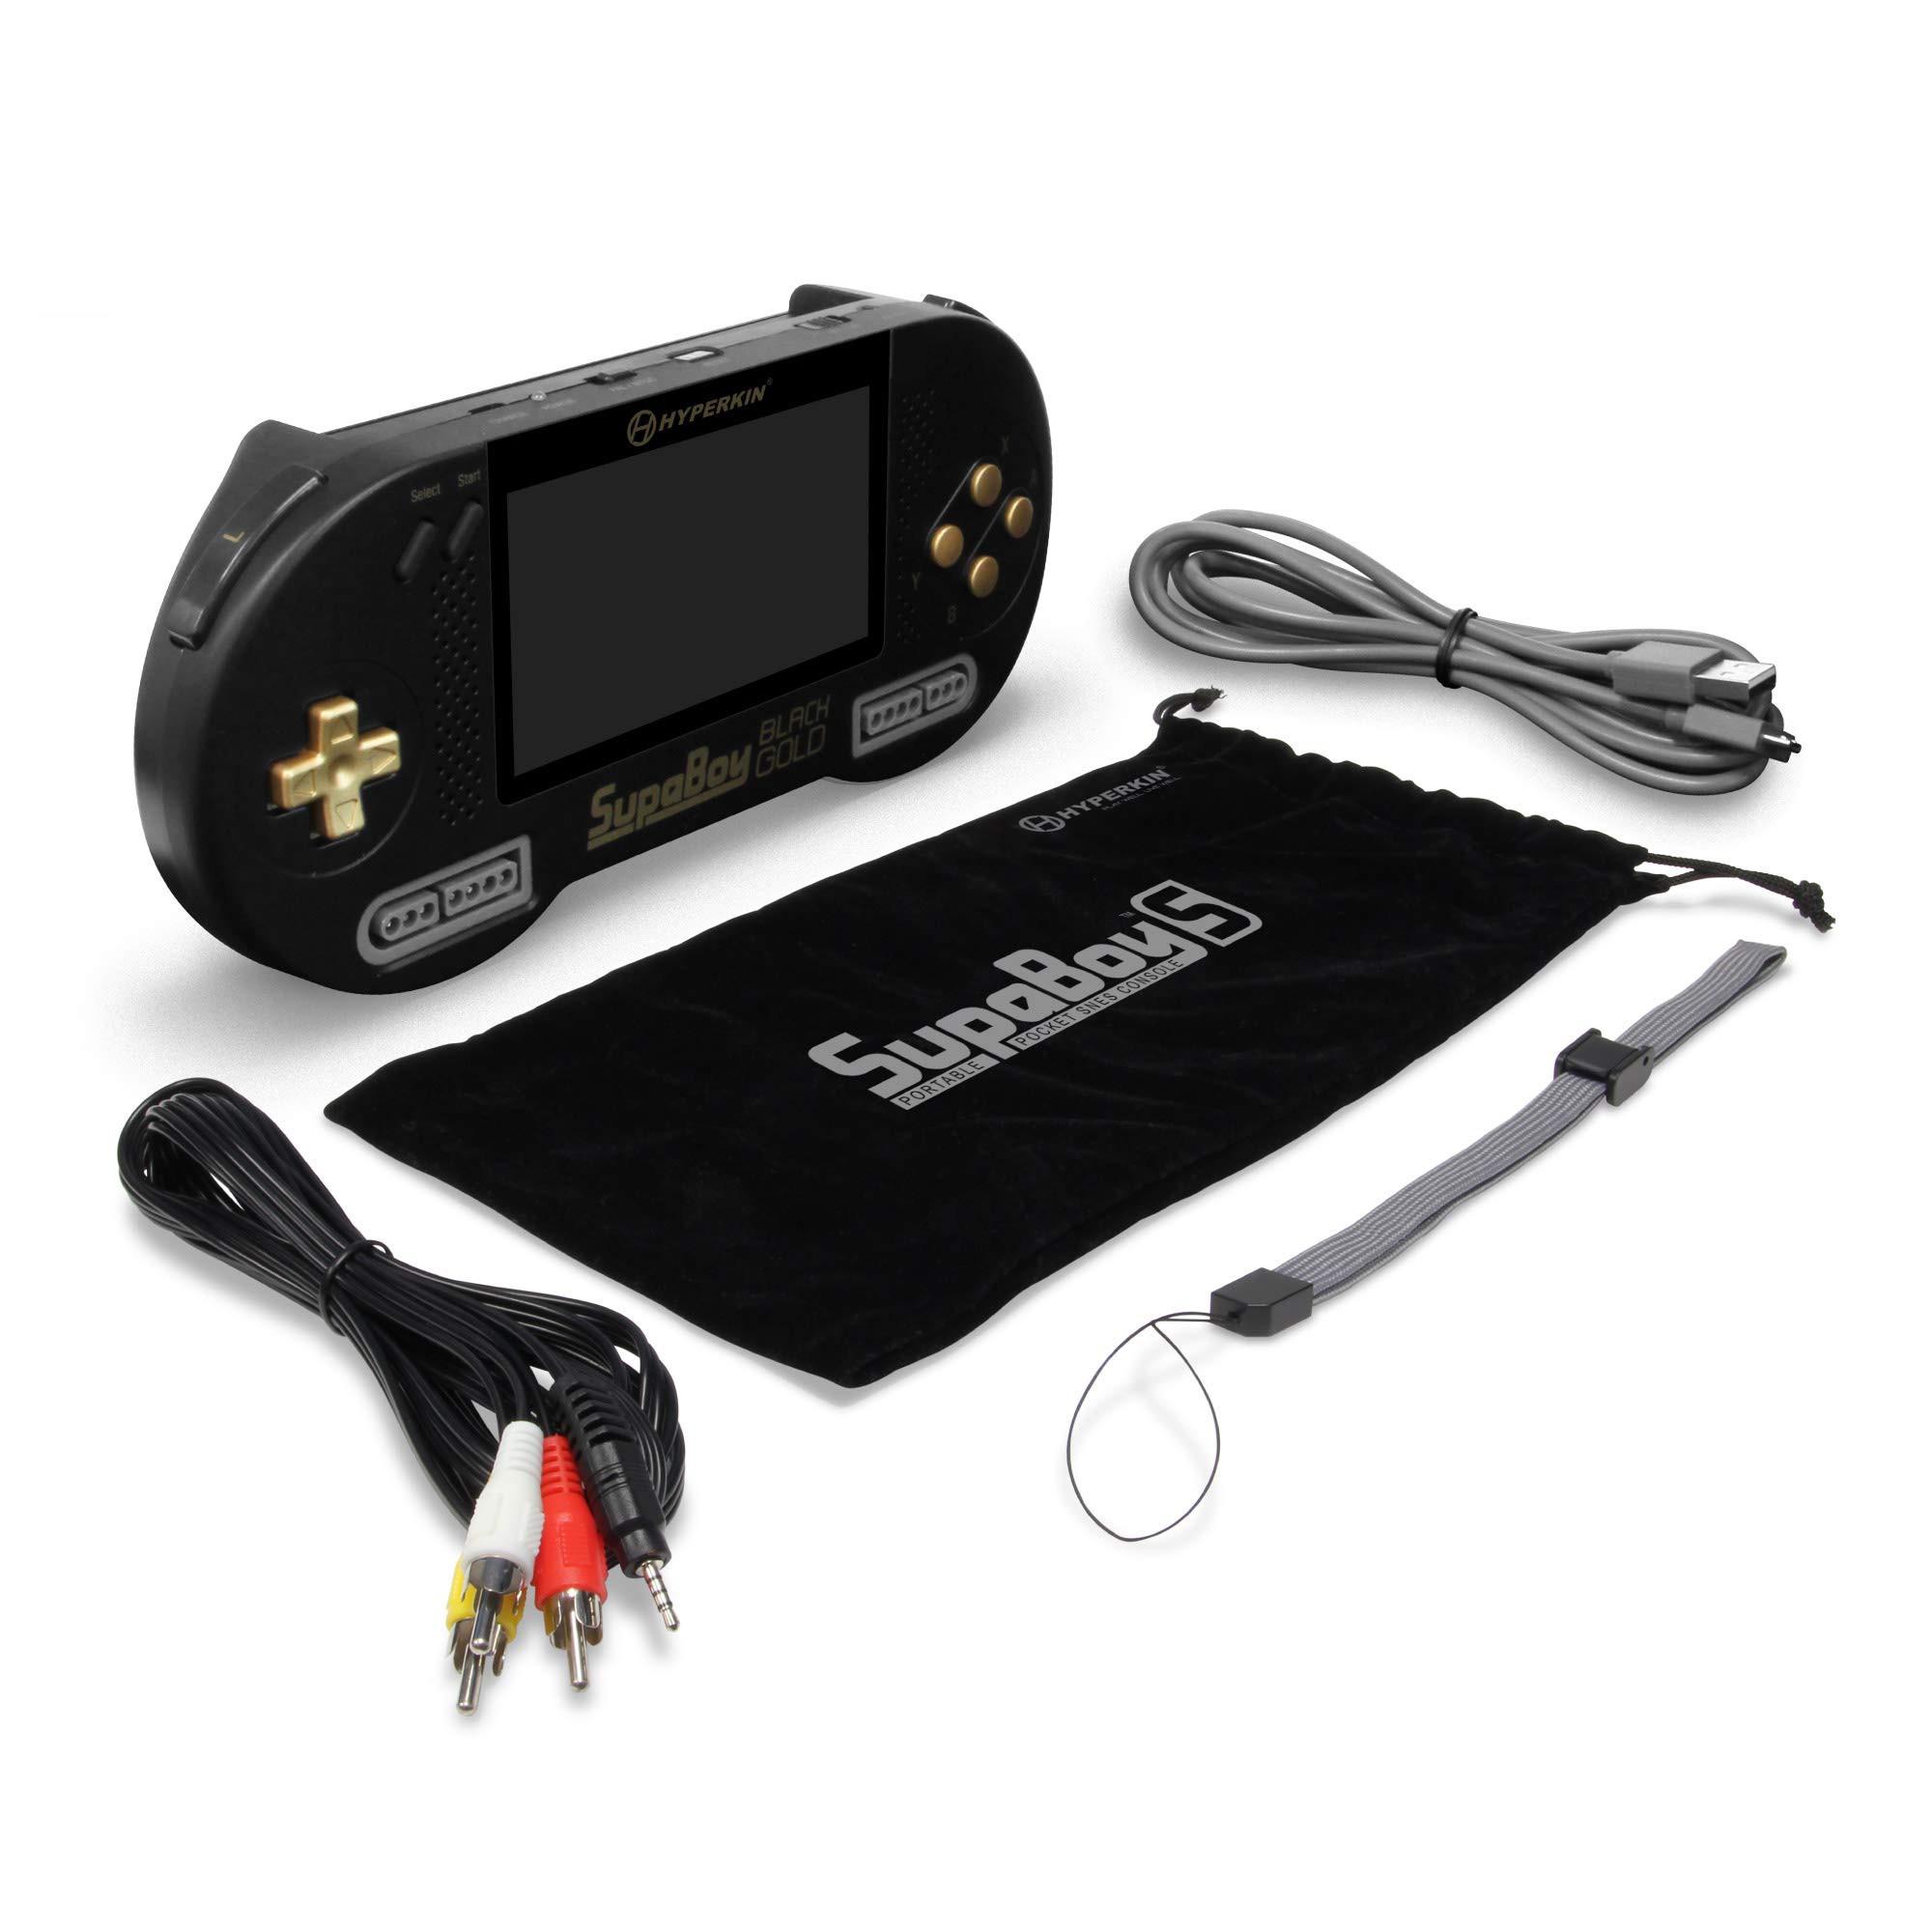 SupaBoy Portable SNES Console - Black Gold Edition | Super Nintendo Hardware | RetroNintendoKopen.nl